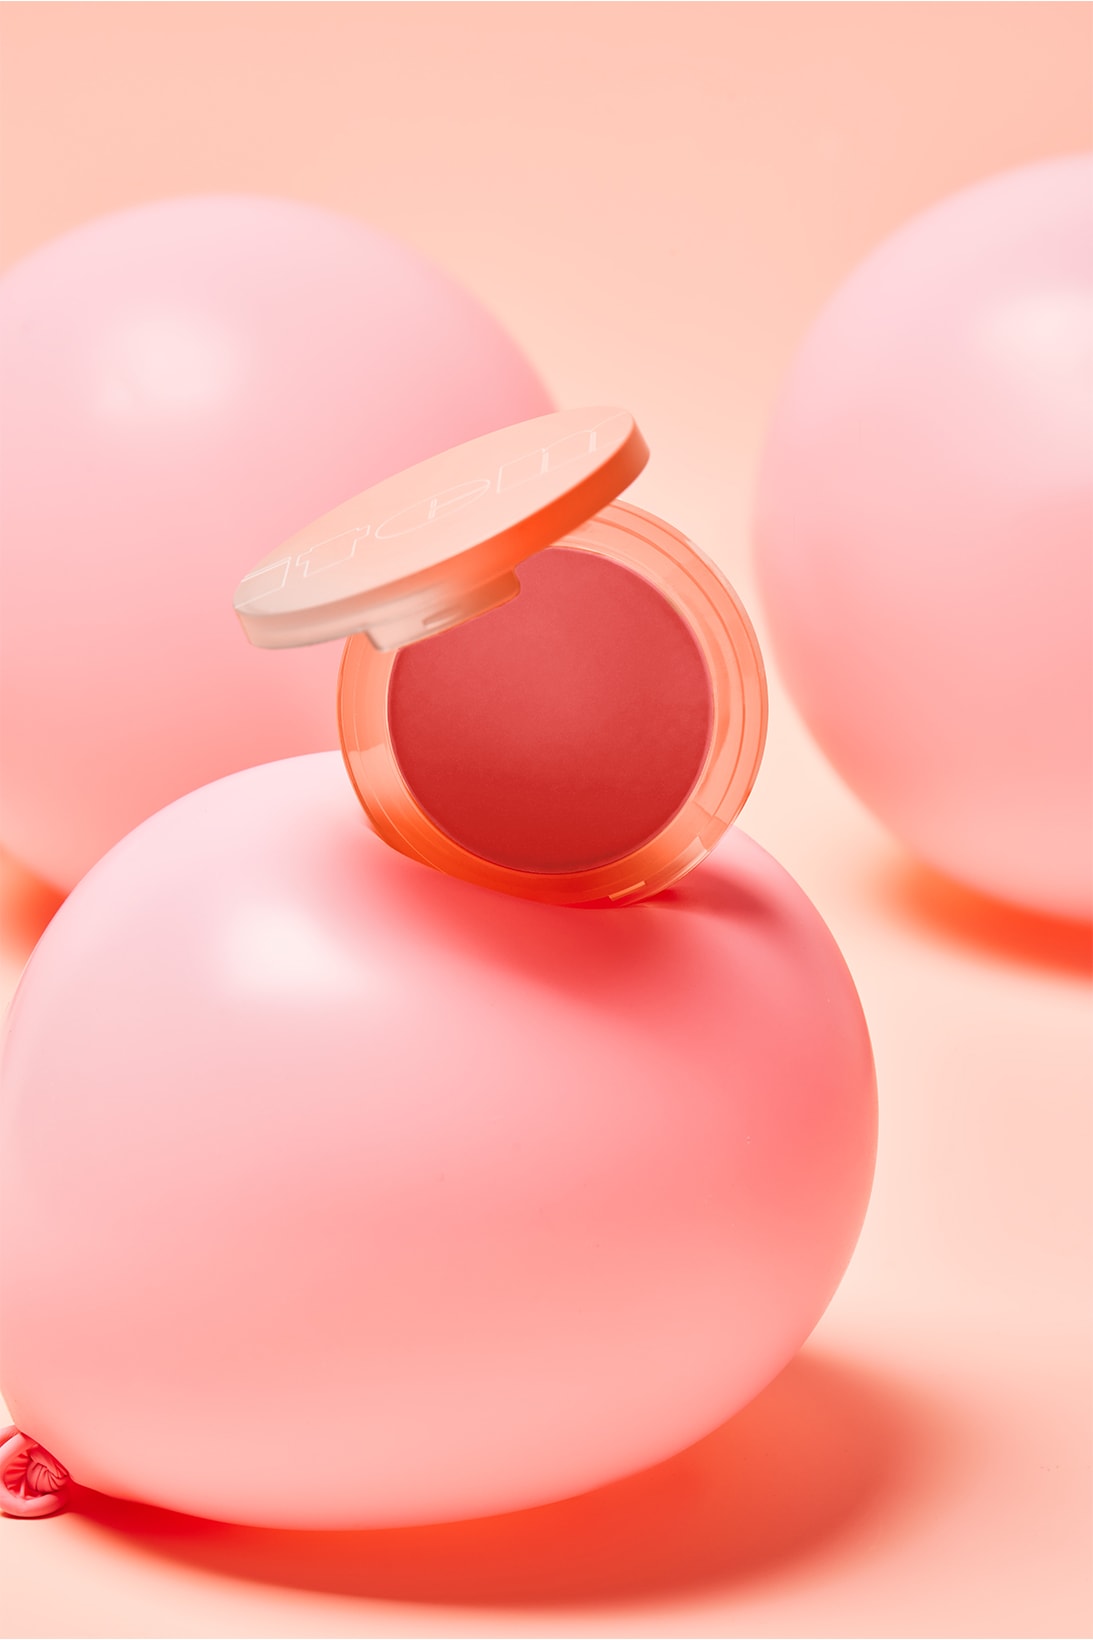 ITEM Beauty Blushin' Like Blushes Admit It Oopsies Bad Bleep Addison Rae Product Shot Balloons